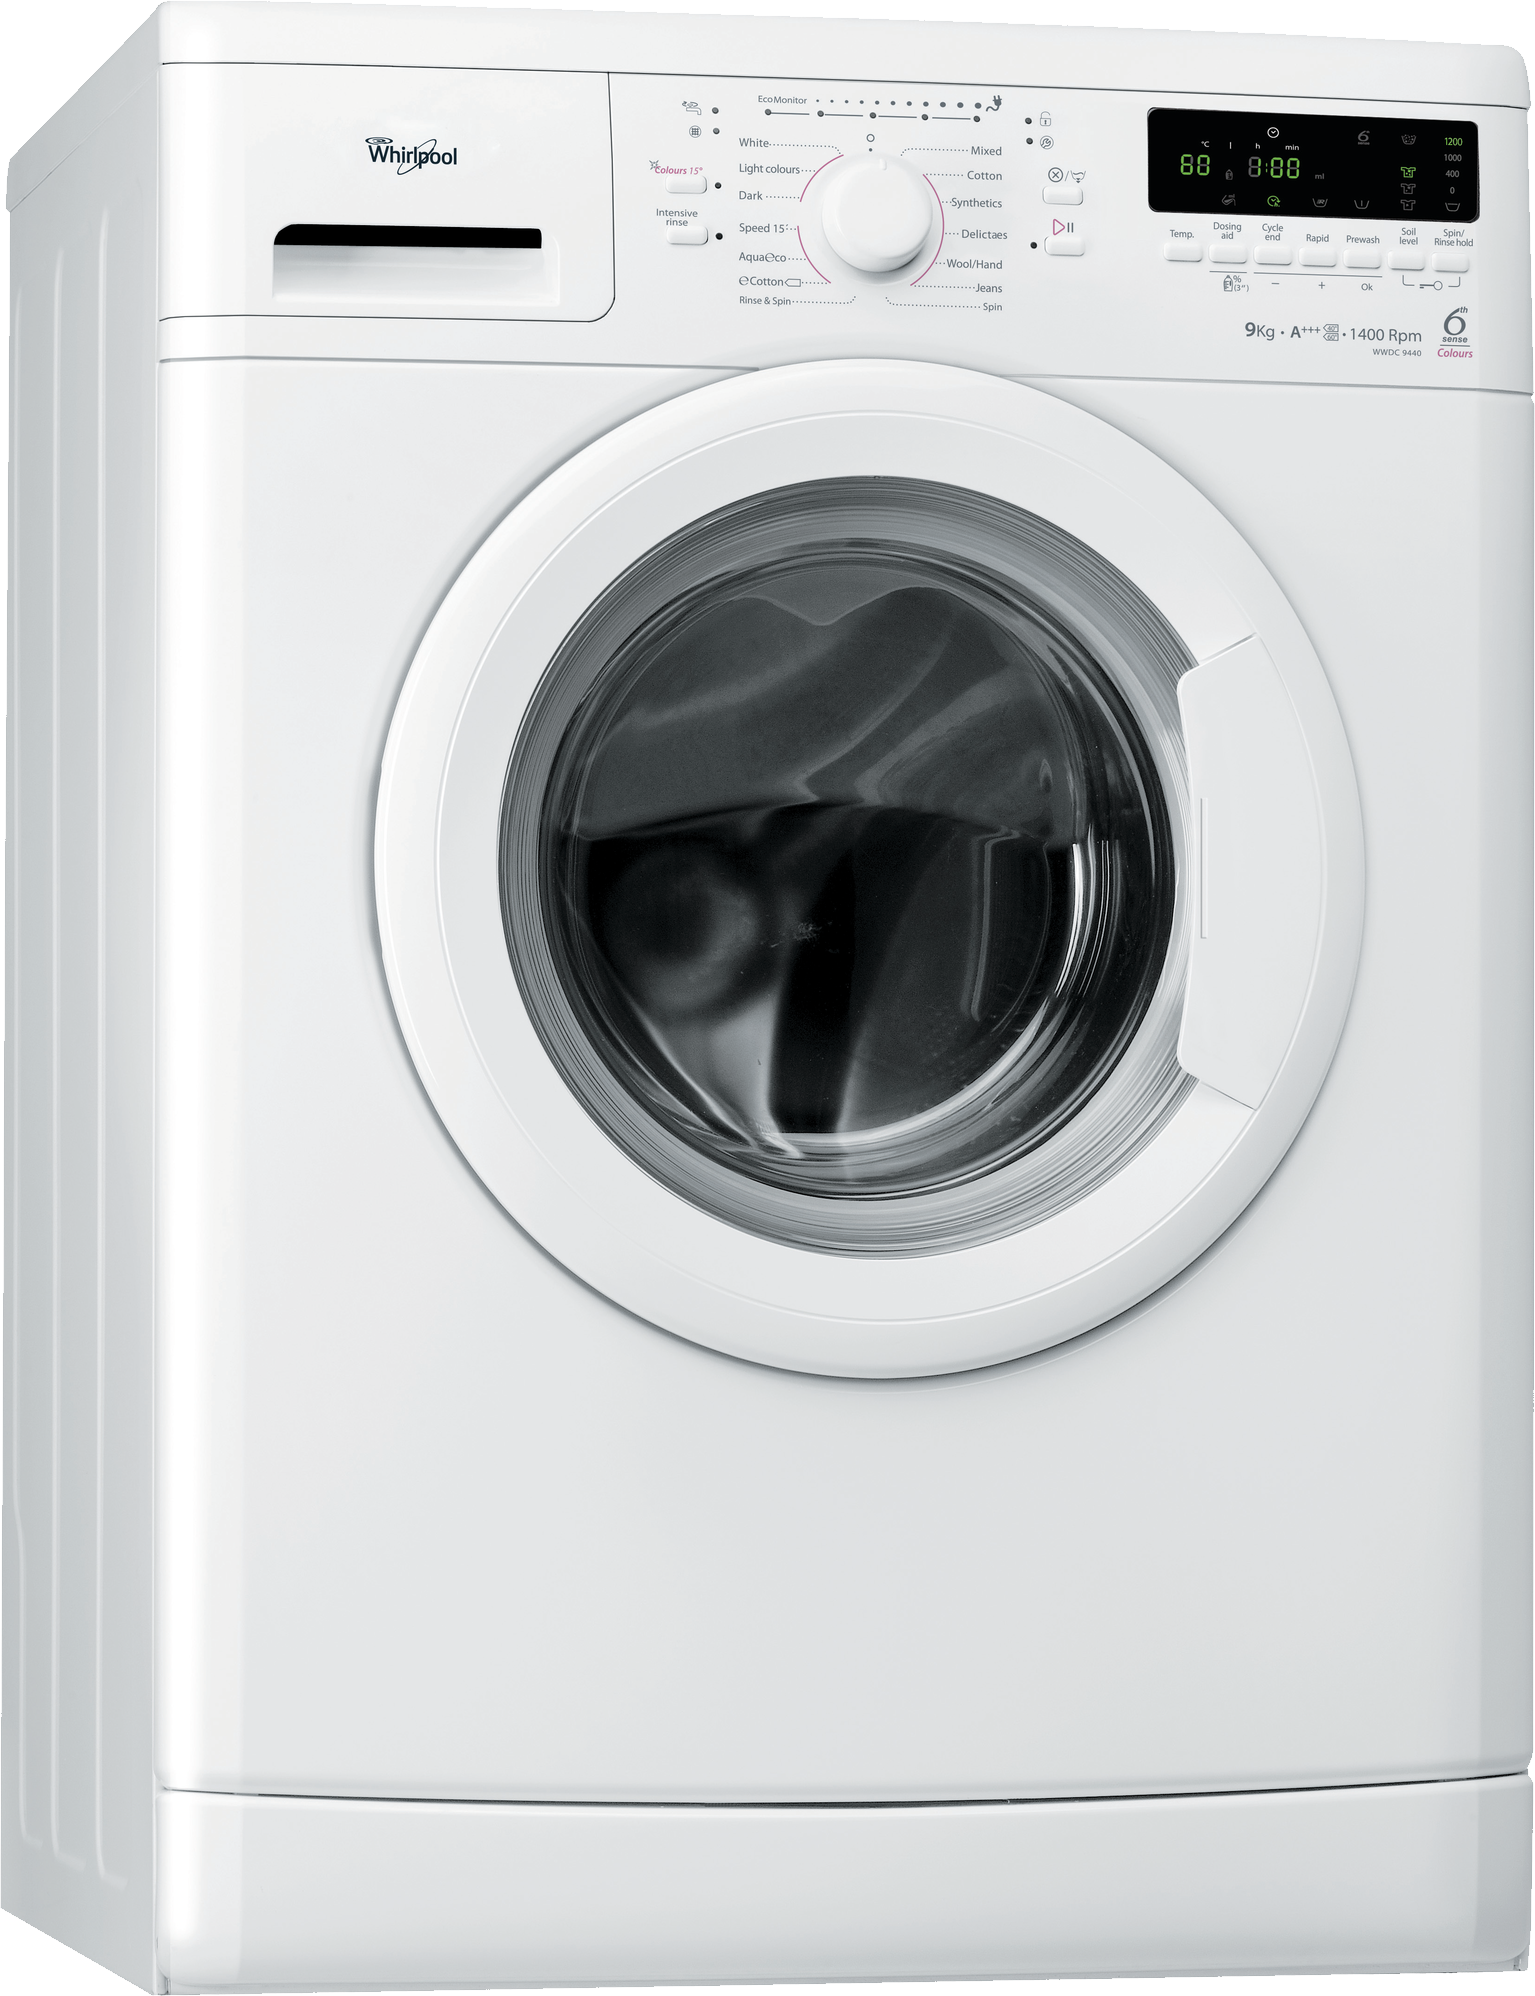 Washing Machine PNG Transparent Image Download Size X Px